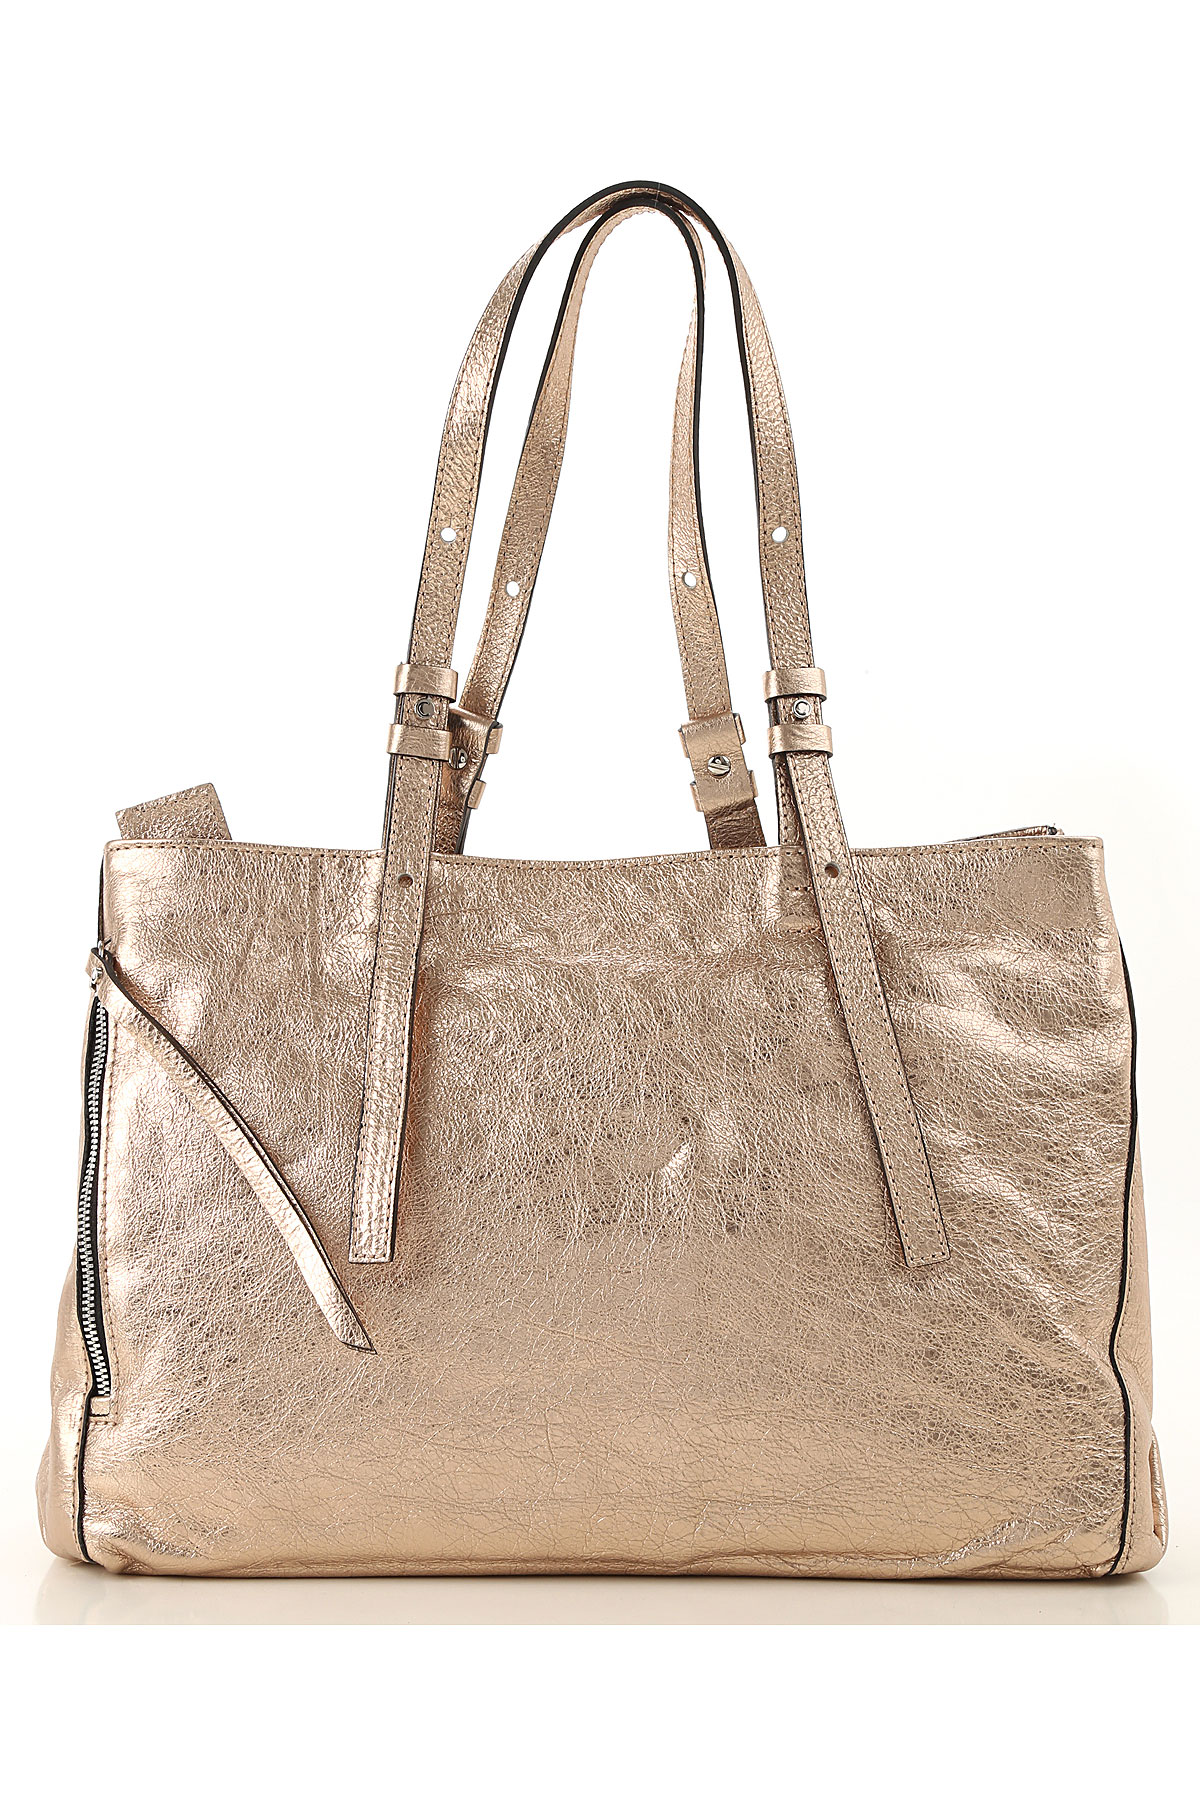 Handbags Gianni Chiarini, Style code: 6949-lmw-oro